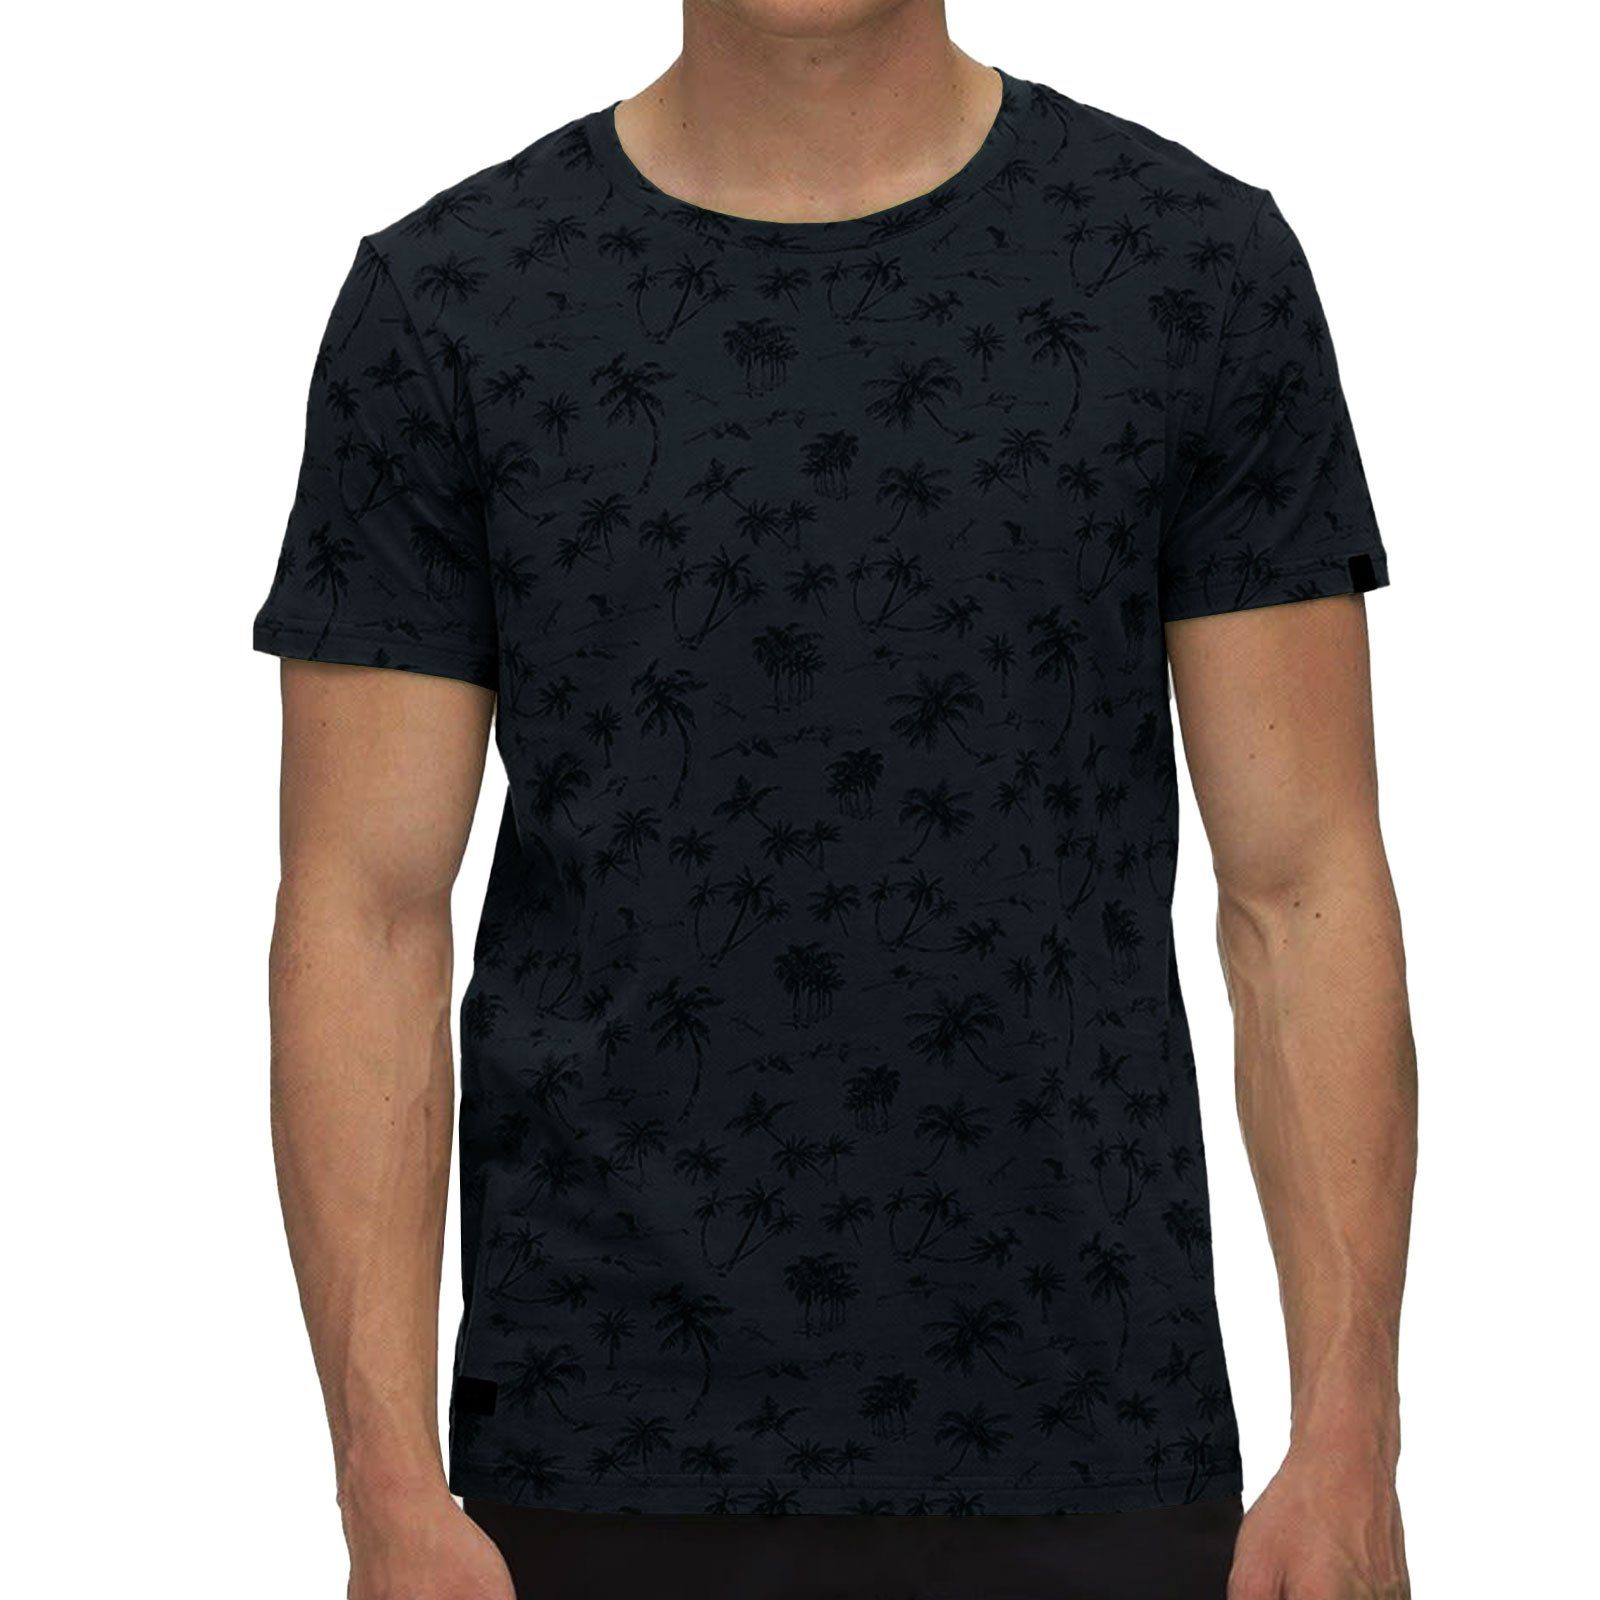 Ragwear T-Shirt Wanno mit Allover-Palmen-Print dark 3012 grey